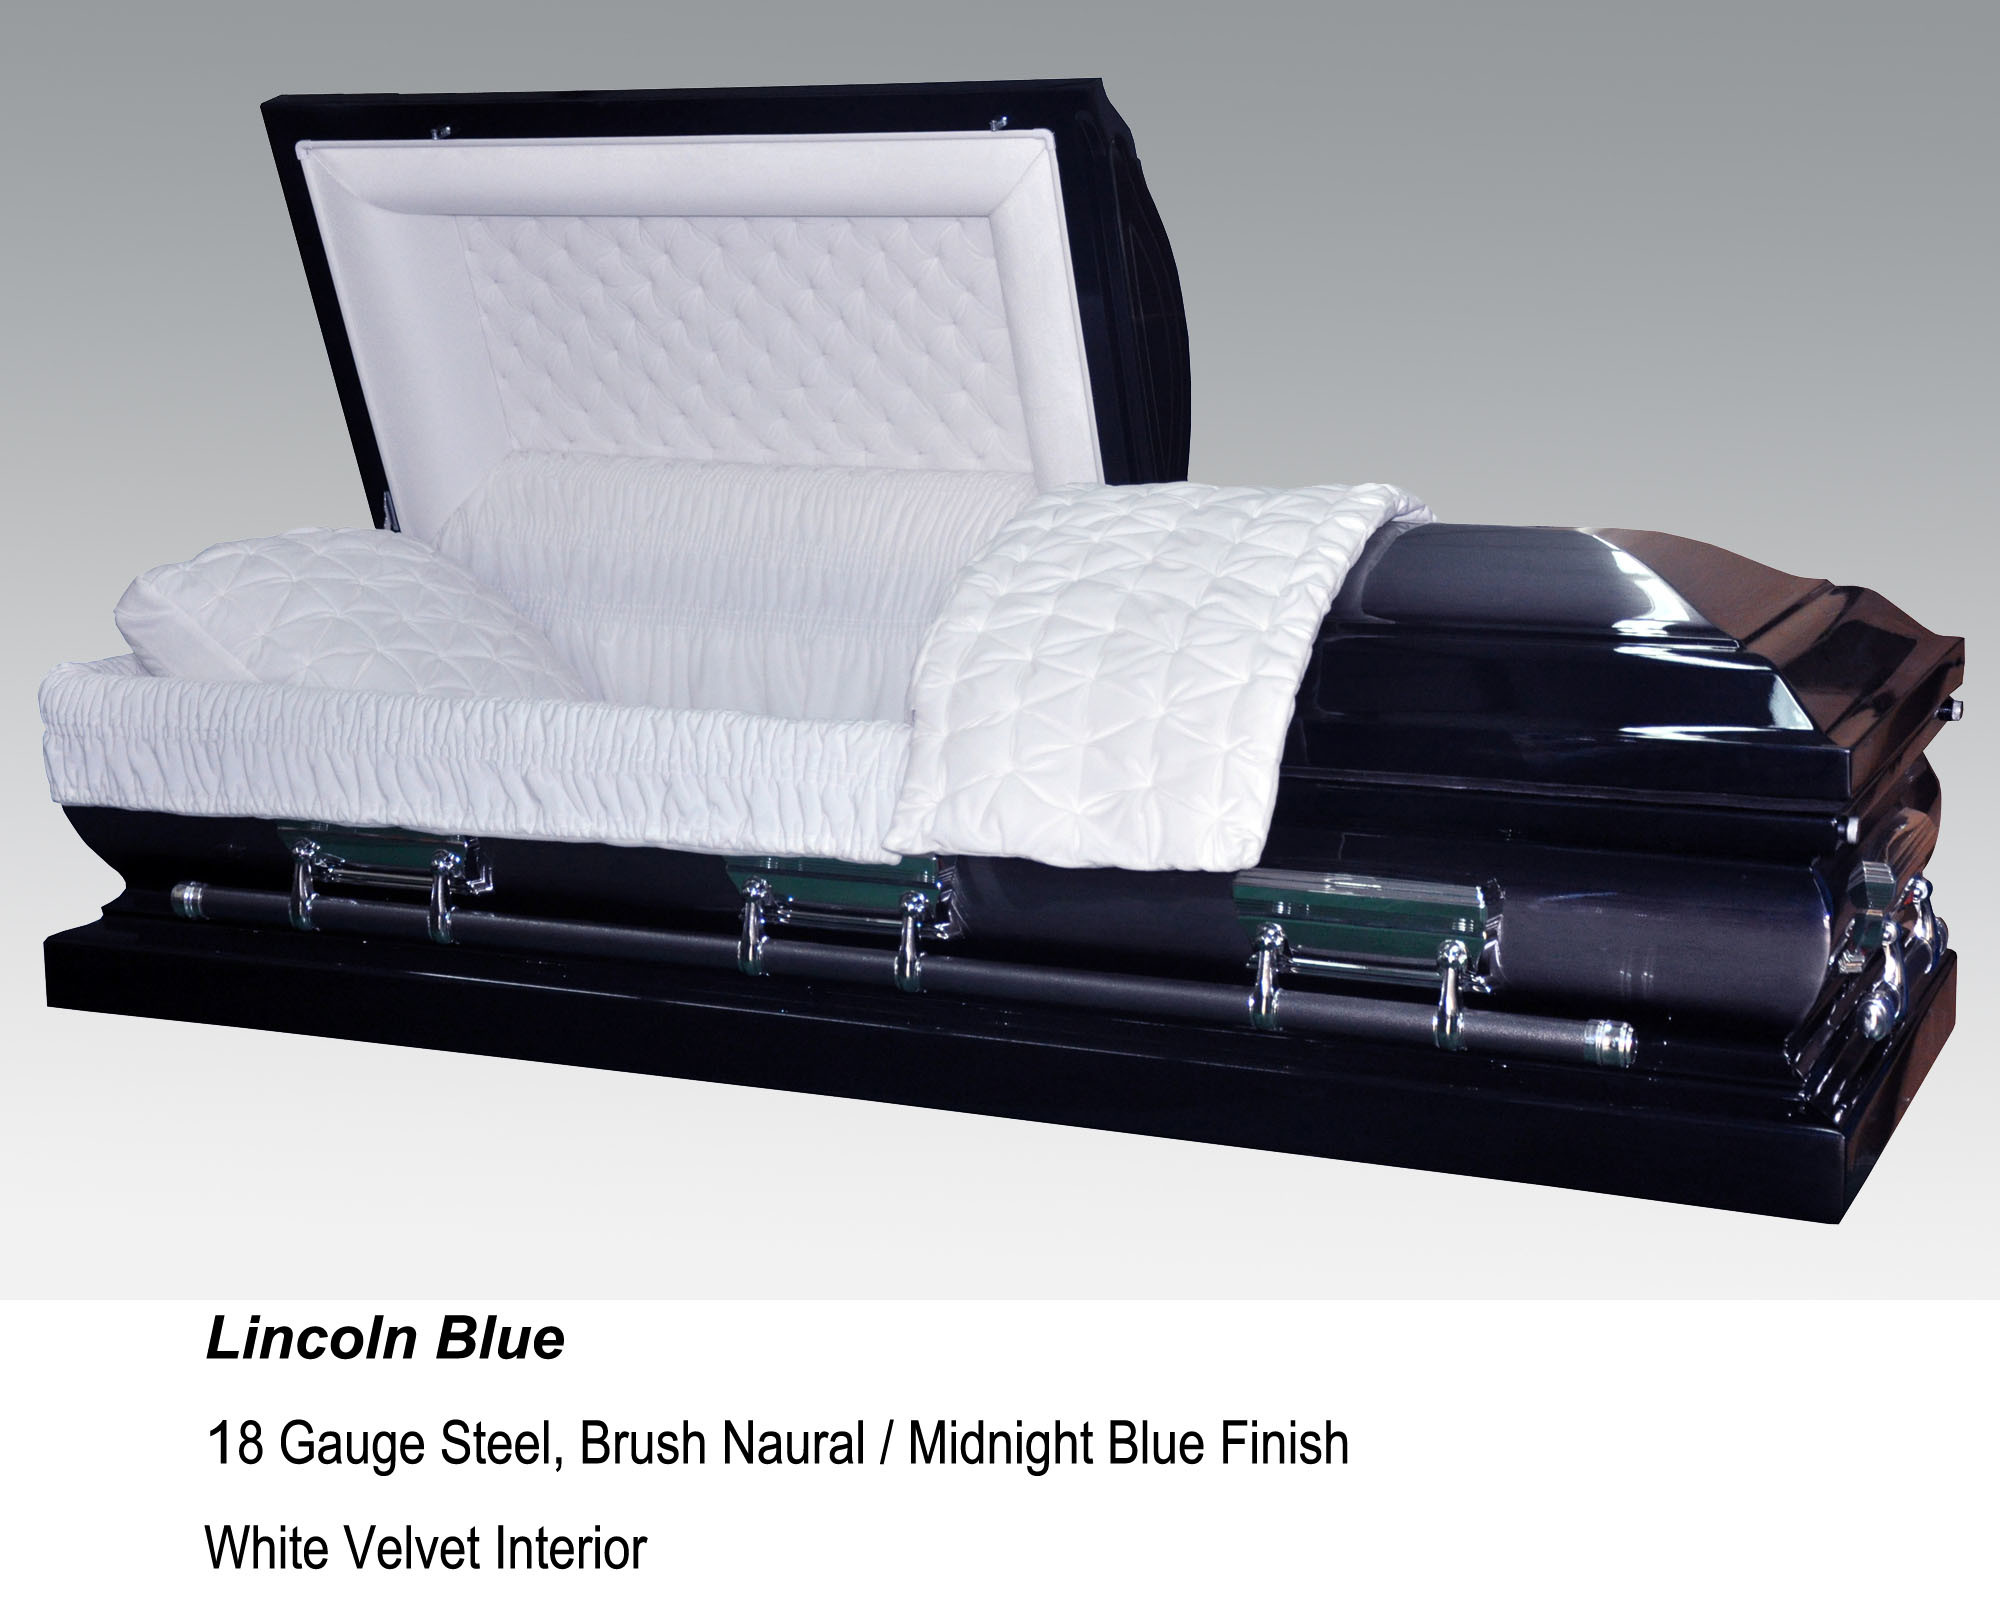 Lincoln Blue Casket